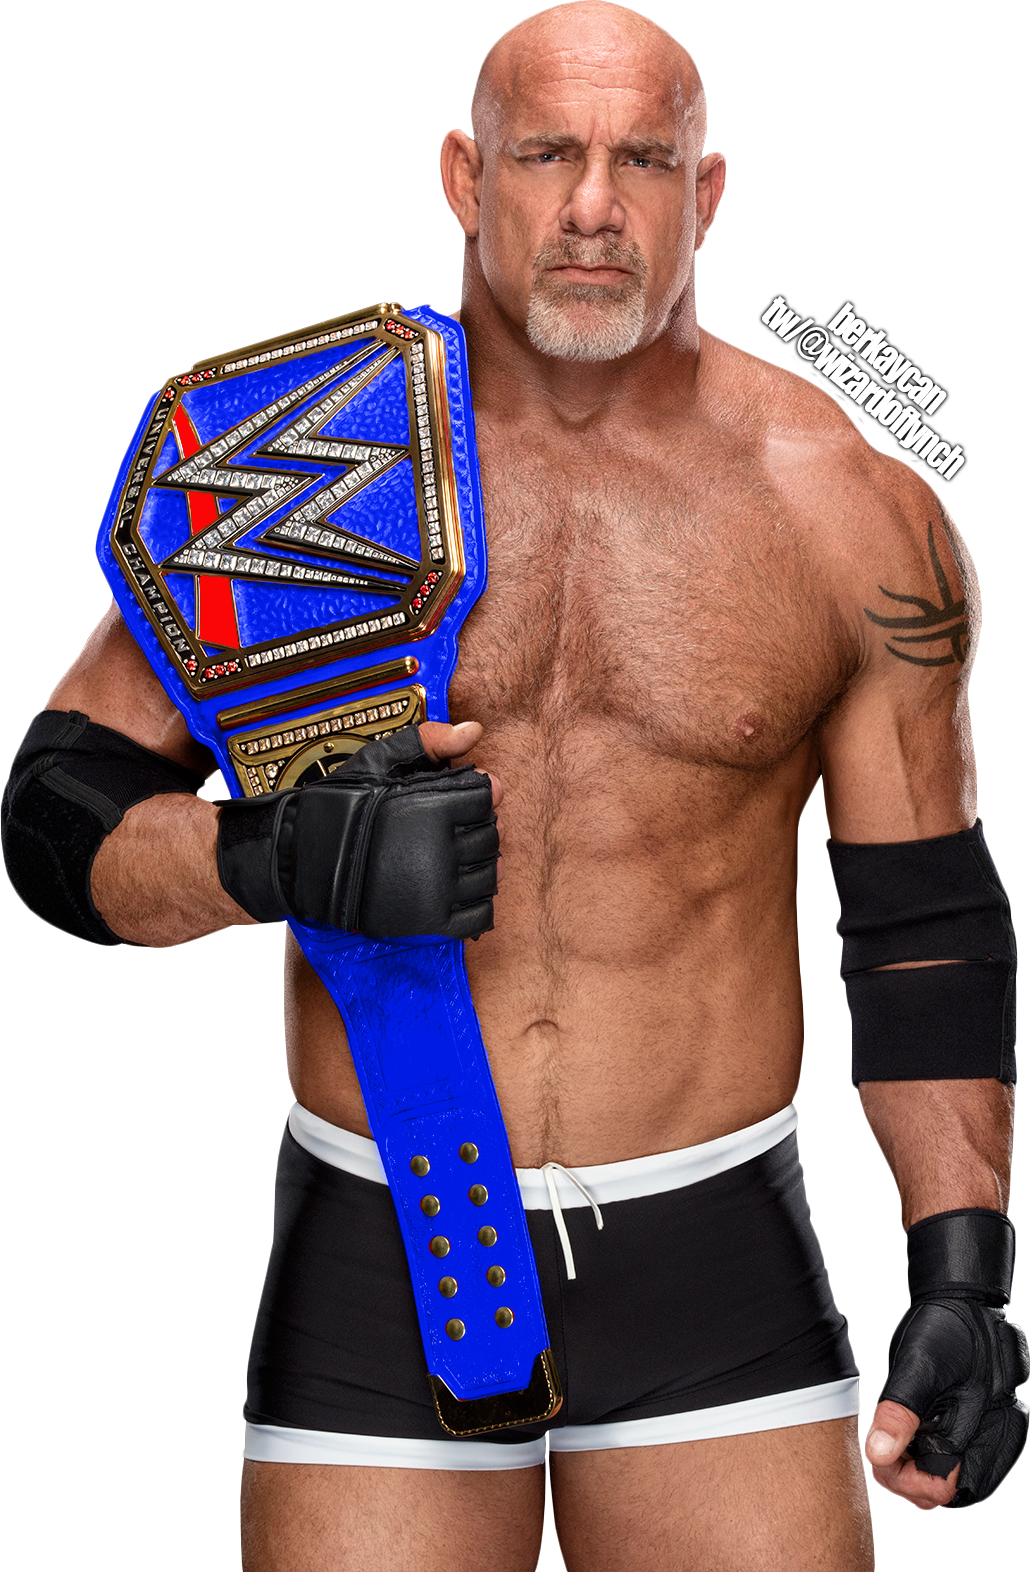 Goldberg New Wwe Smackdown Universal Champion Png By Berkaycan On Deviantart